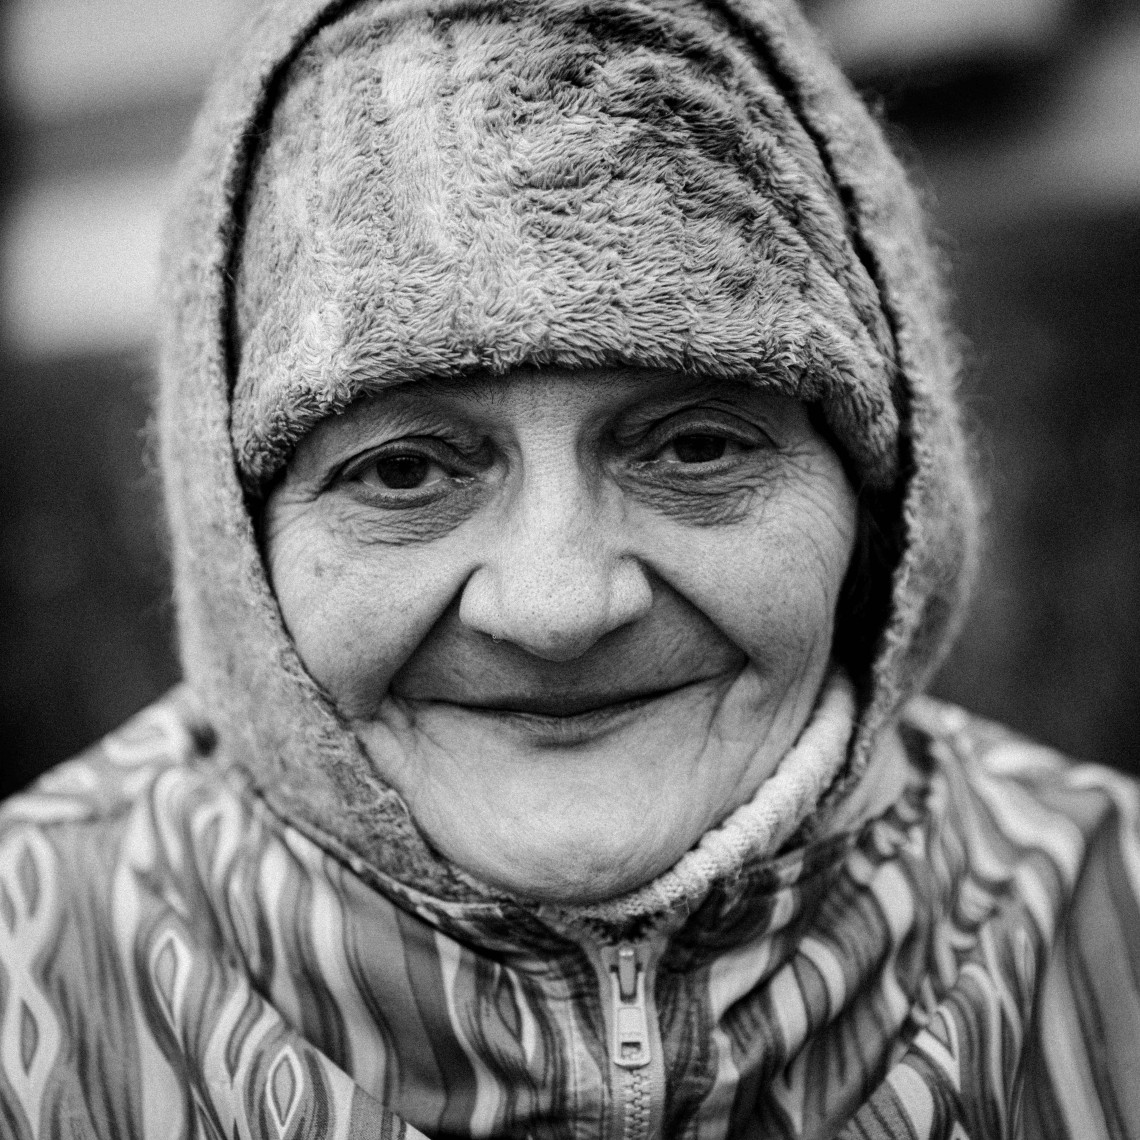 Left behind in Ukraine: The faces of Bucha